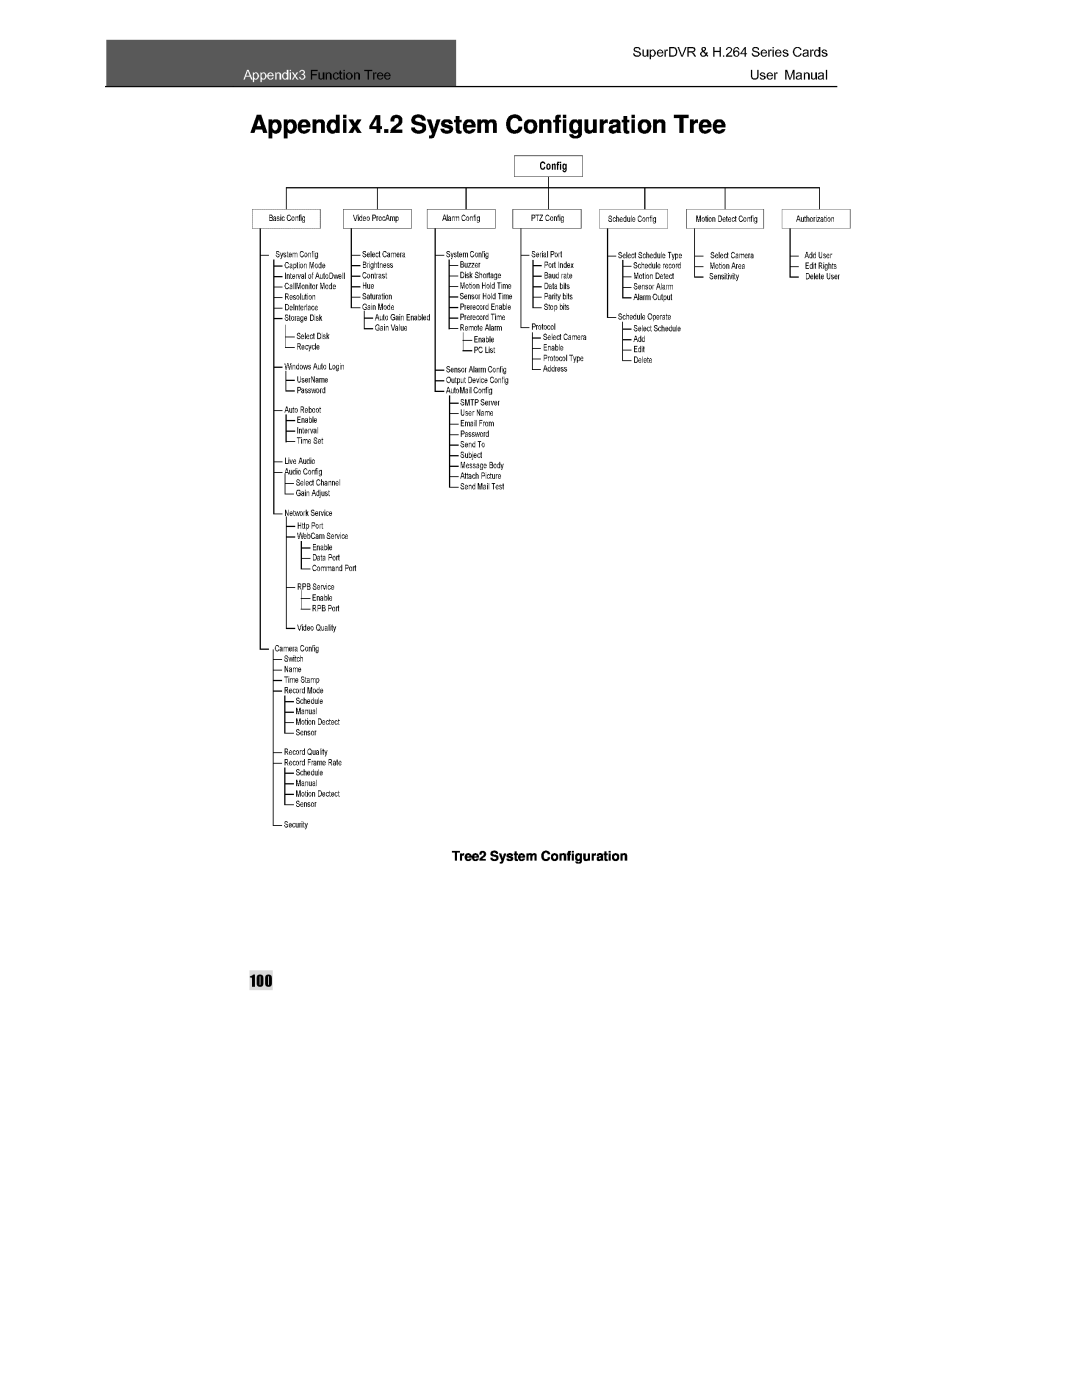 Q-See QSDT8PCRC manual Function Tree, Appendix 4.2 System Configuration Tree, User Manual, Tree2 System Configuration 